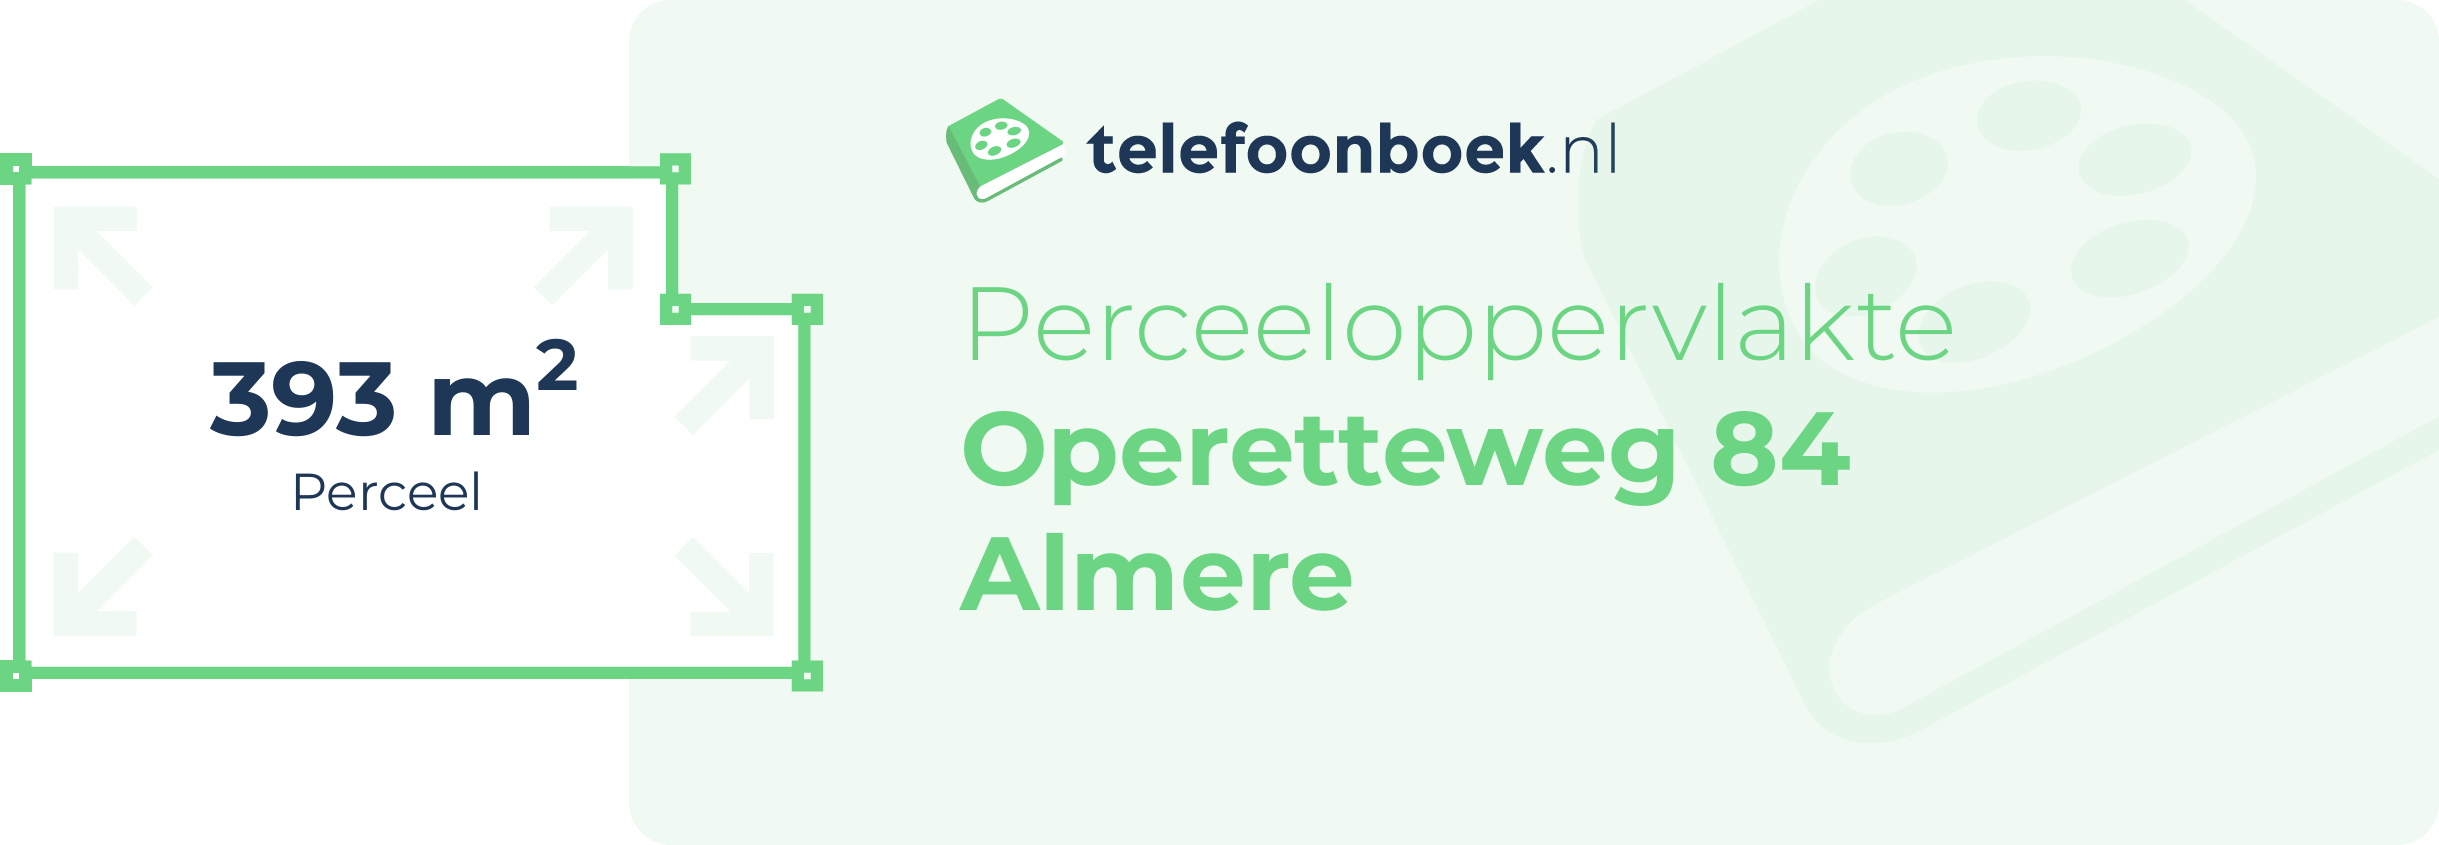 Perceeloppervlakte Operetteweg 84 Almere